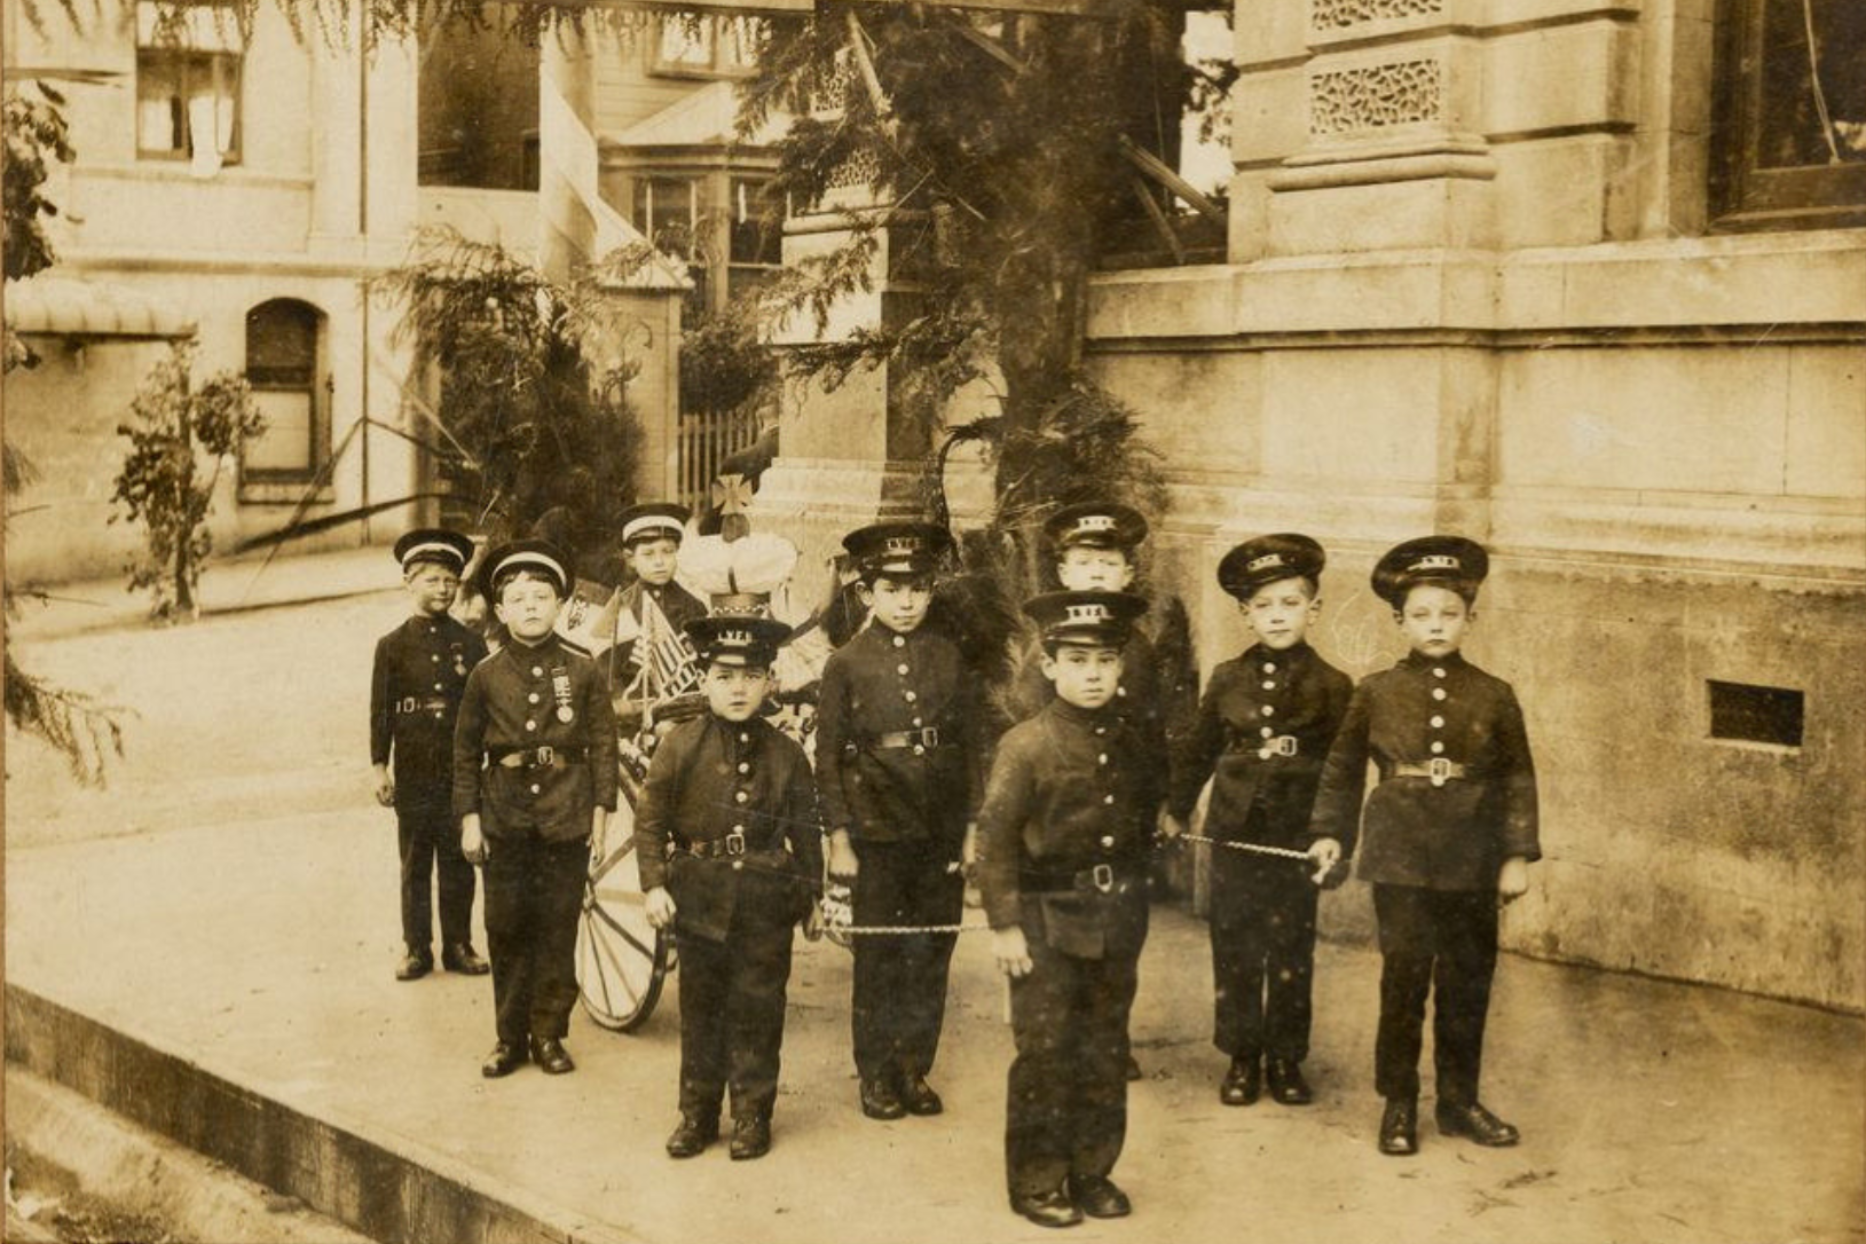 Nine young boys dressed in Lyttelton Volunteer Fire Brigade uniforms - 14978.1